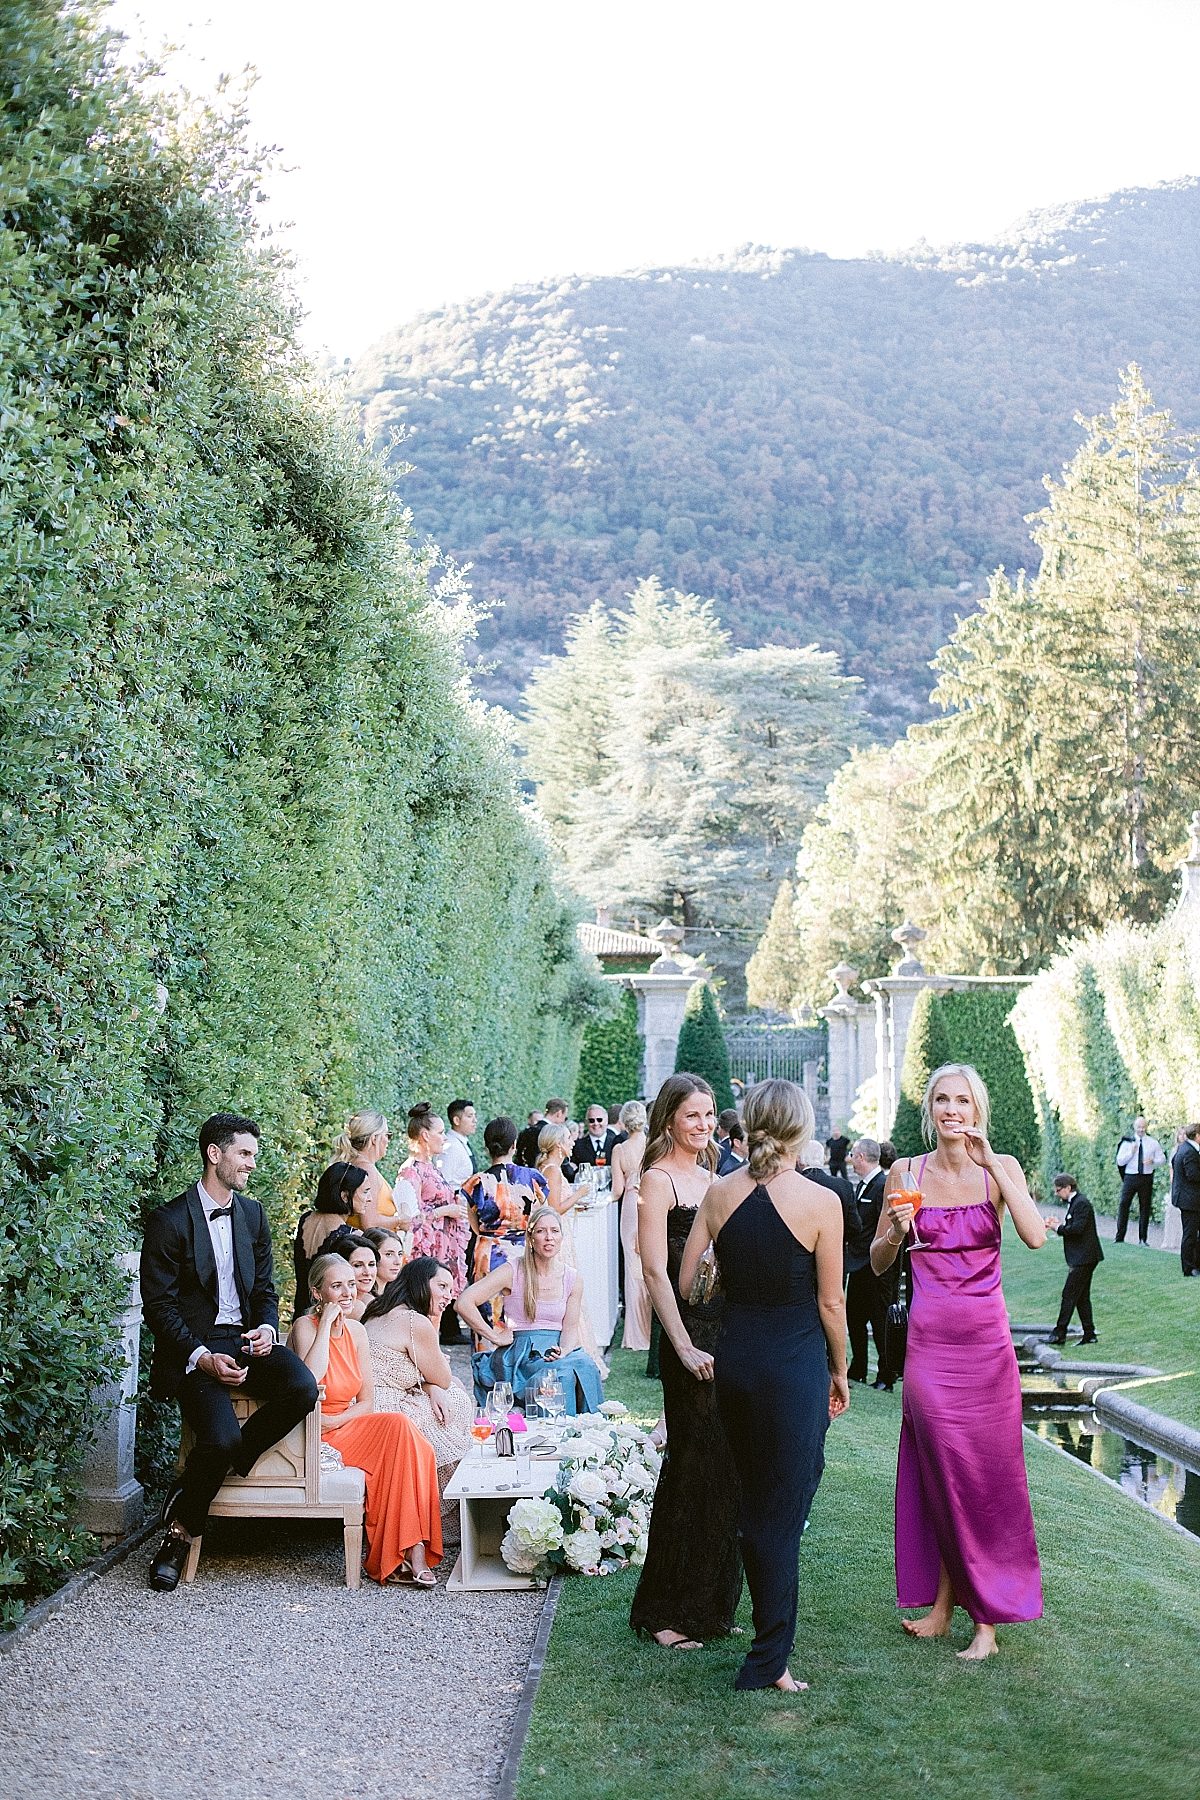 Villa Balbiano Lake como
Luxury wedding 
Photographer lake como 
Cocktail